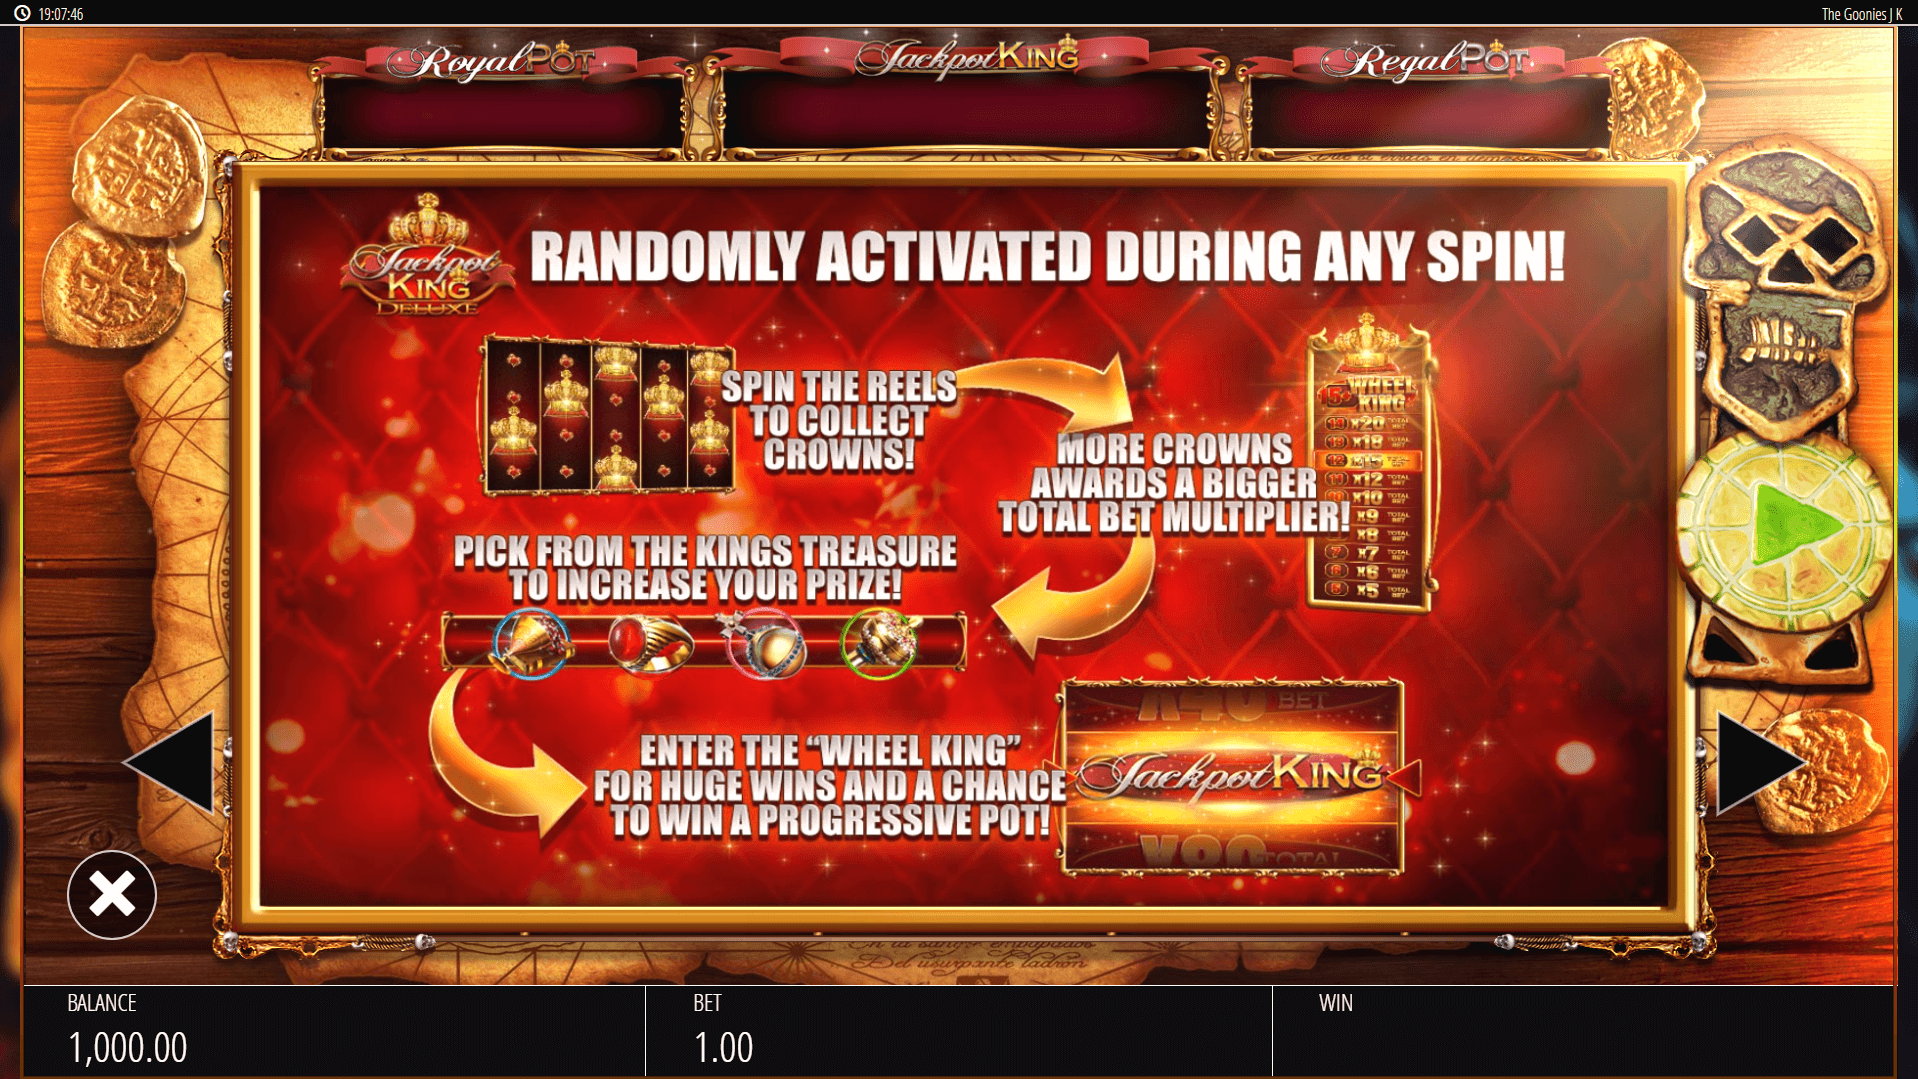 the goonies jackpot king slot machine detail image 0